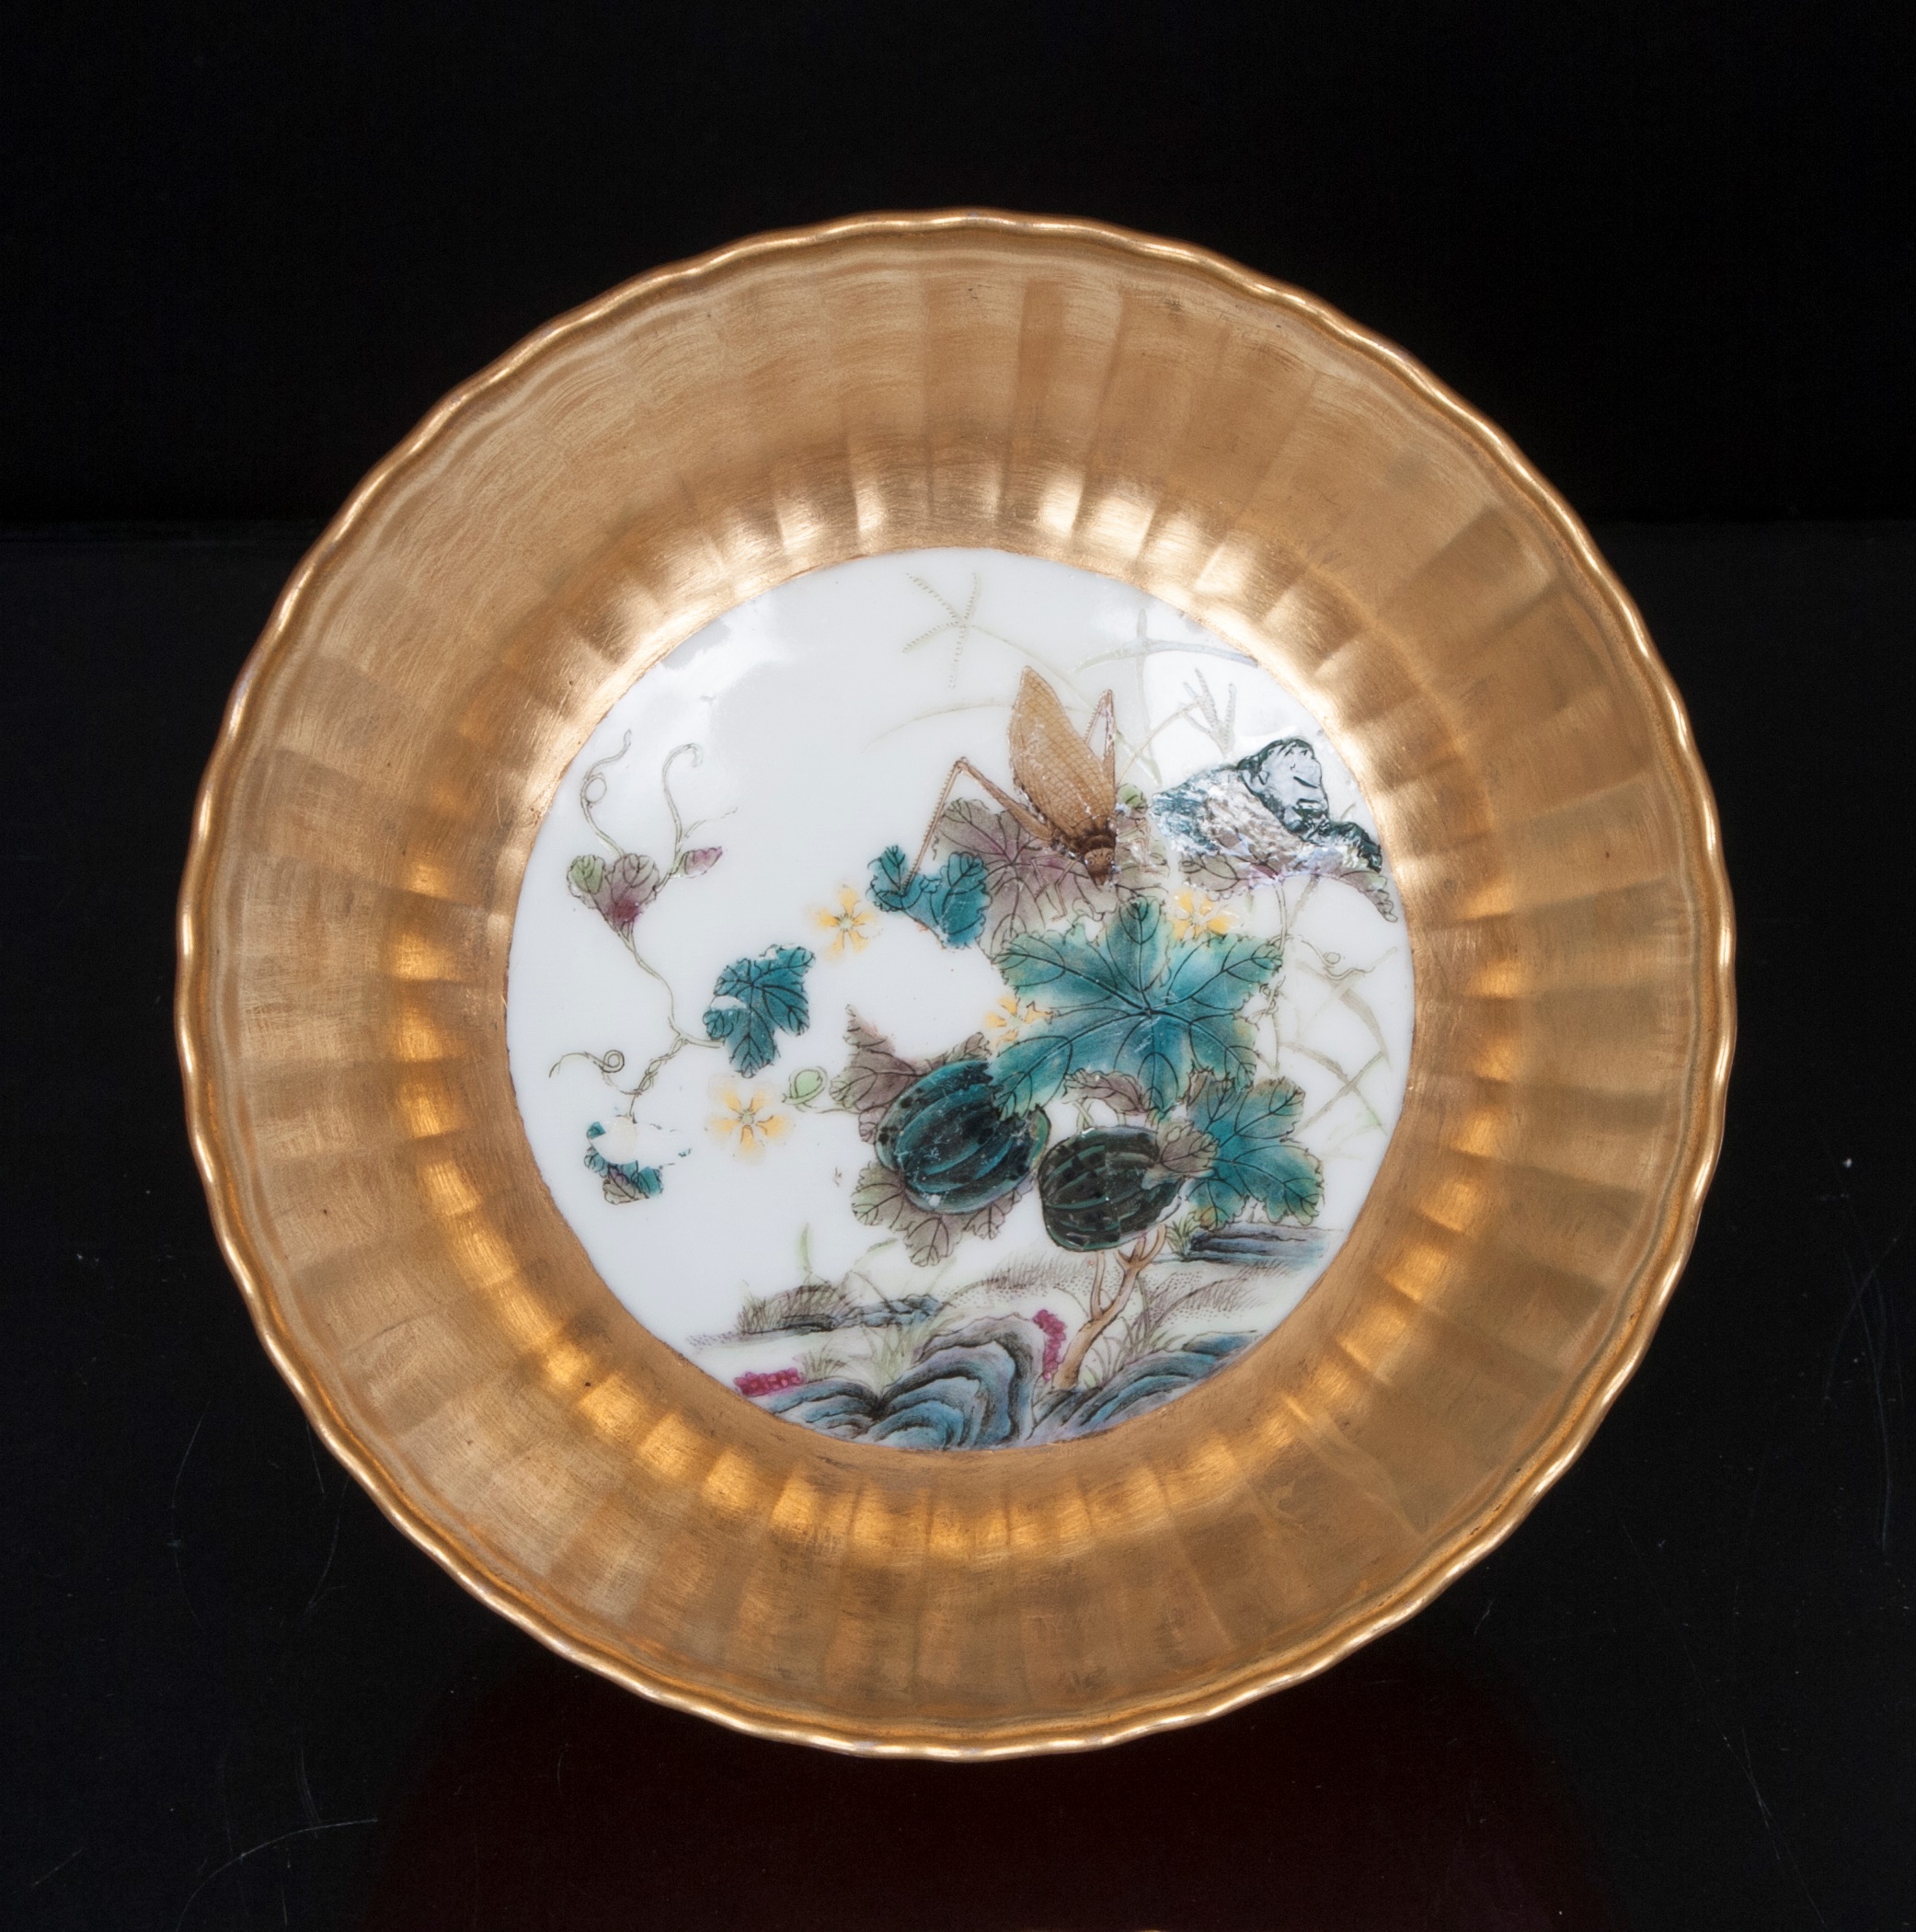 An imitation lacquer chrysanthemum bowl - image 2